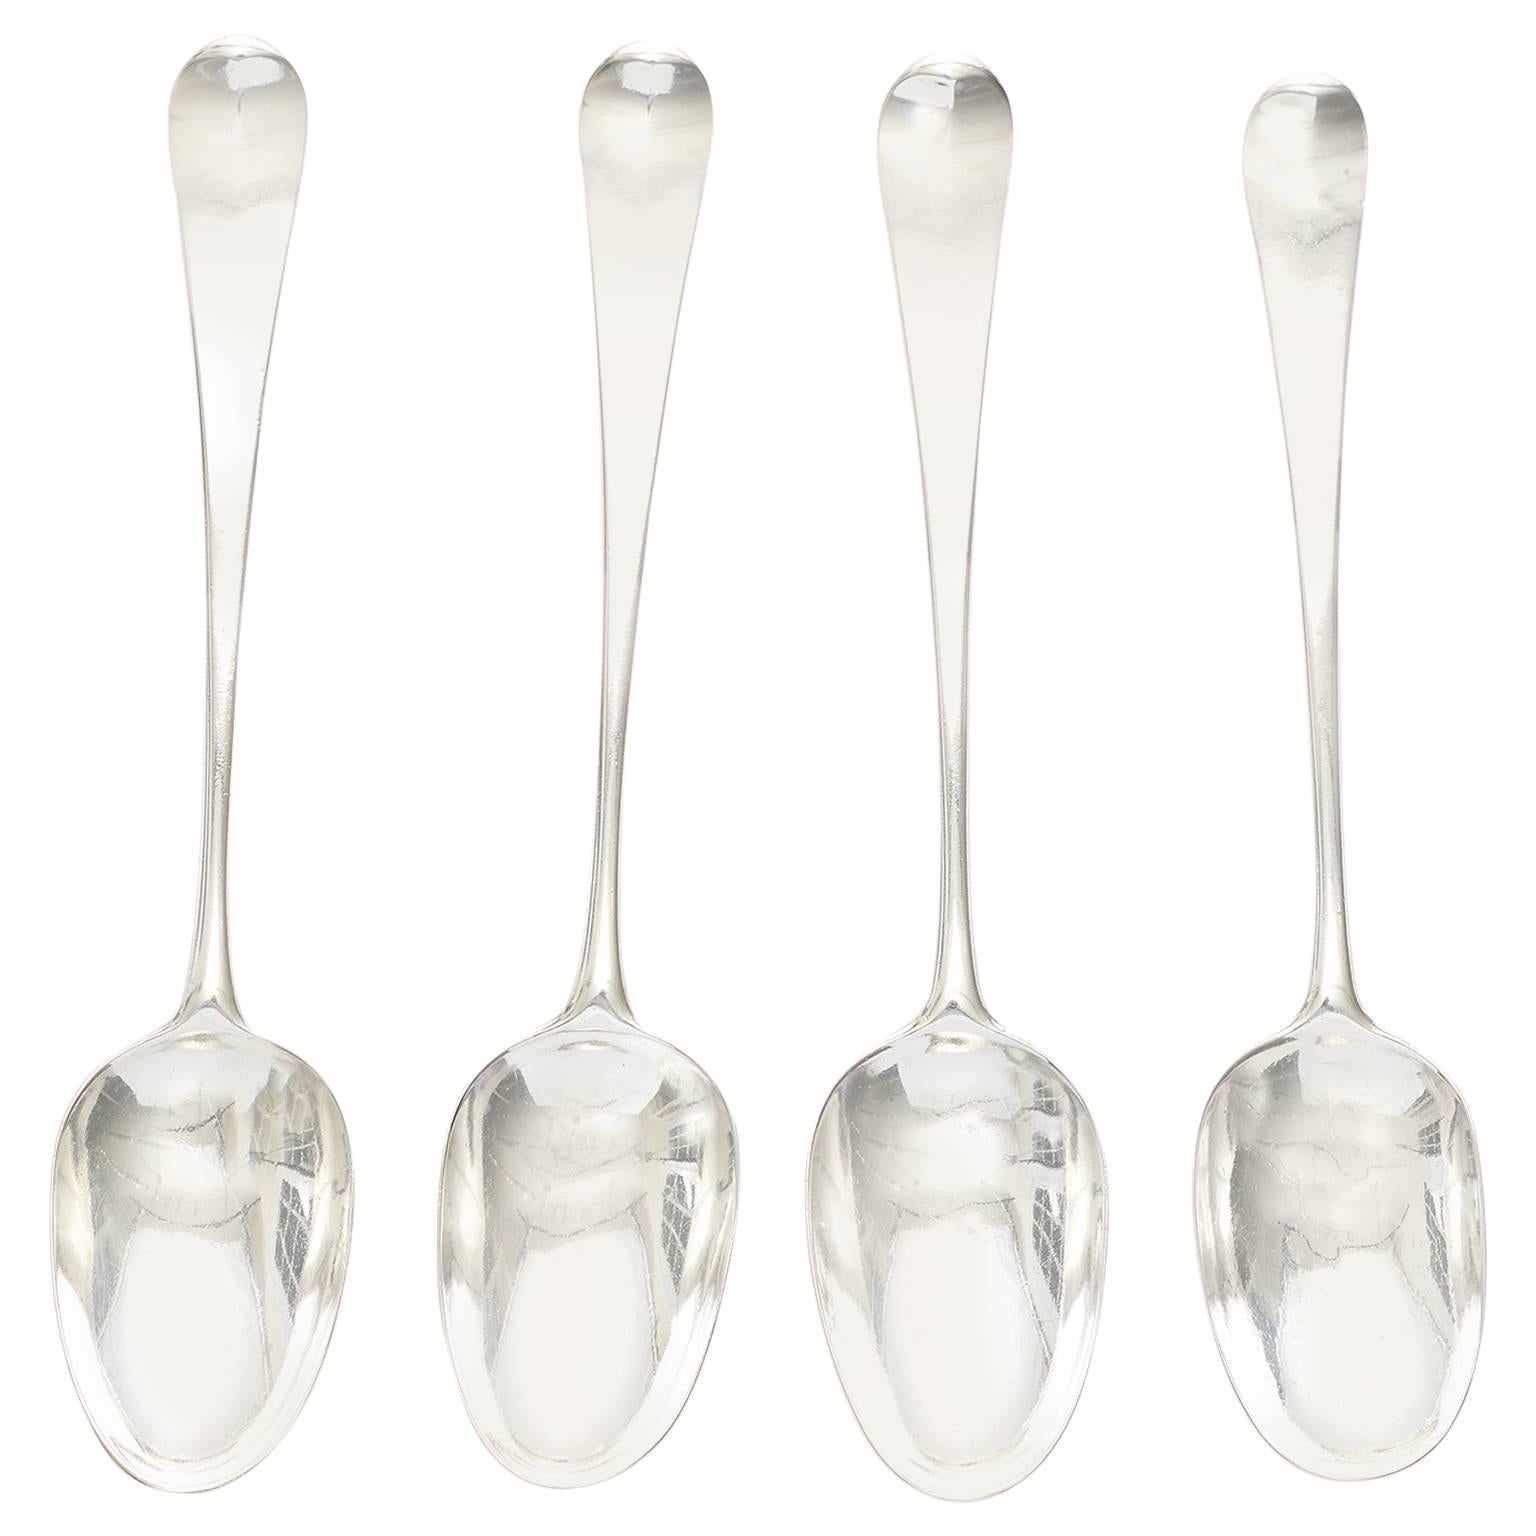 4 Matching Georgian Sterling Basting Spoons c1750 London by Paul Callard For Sale